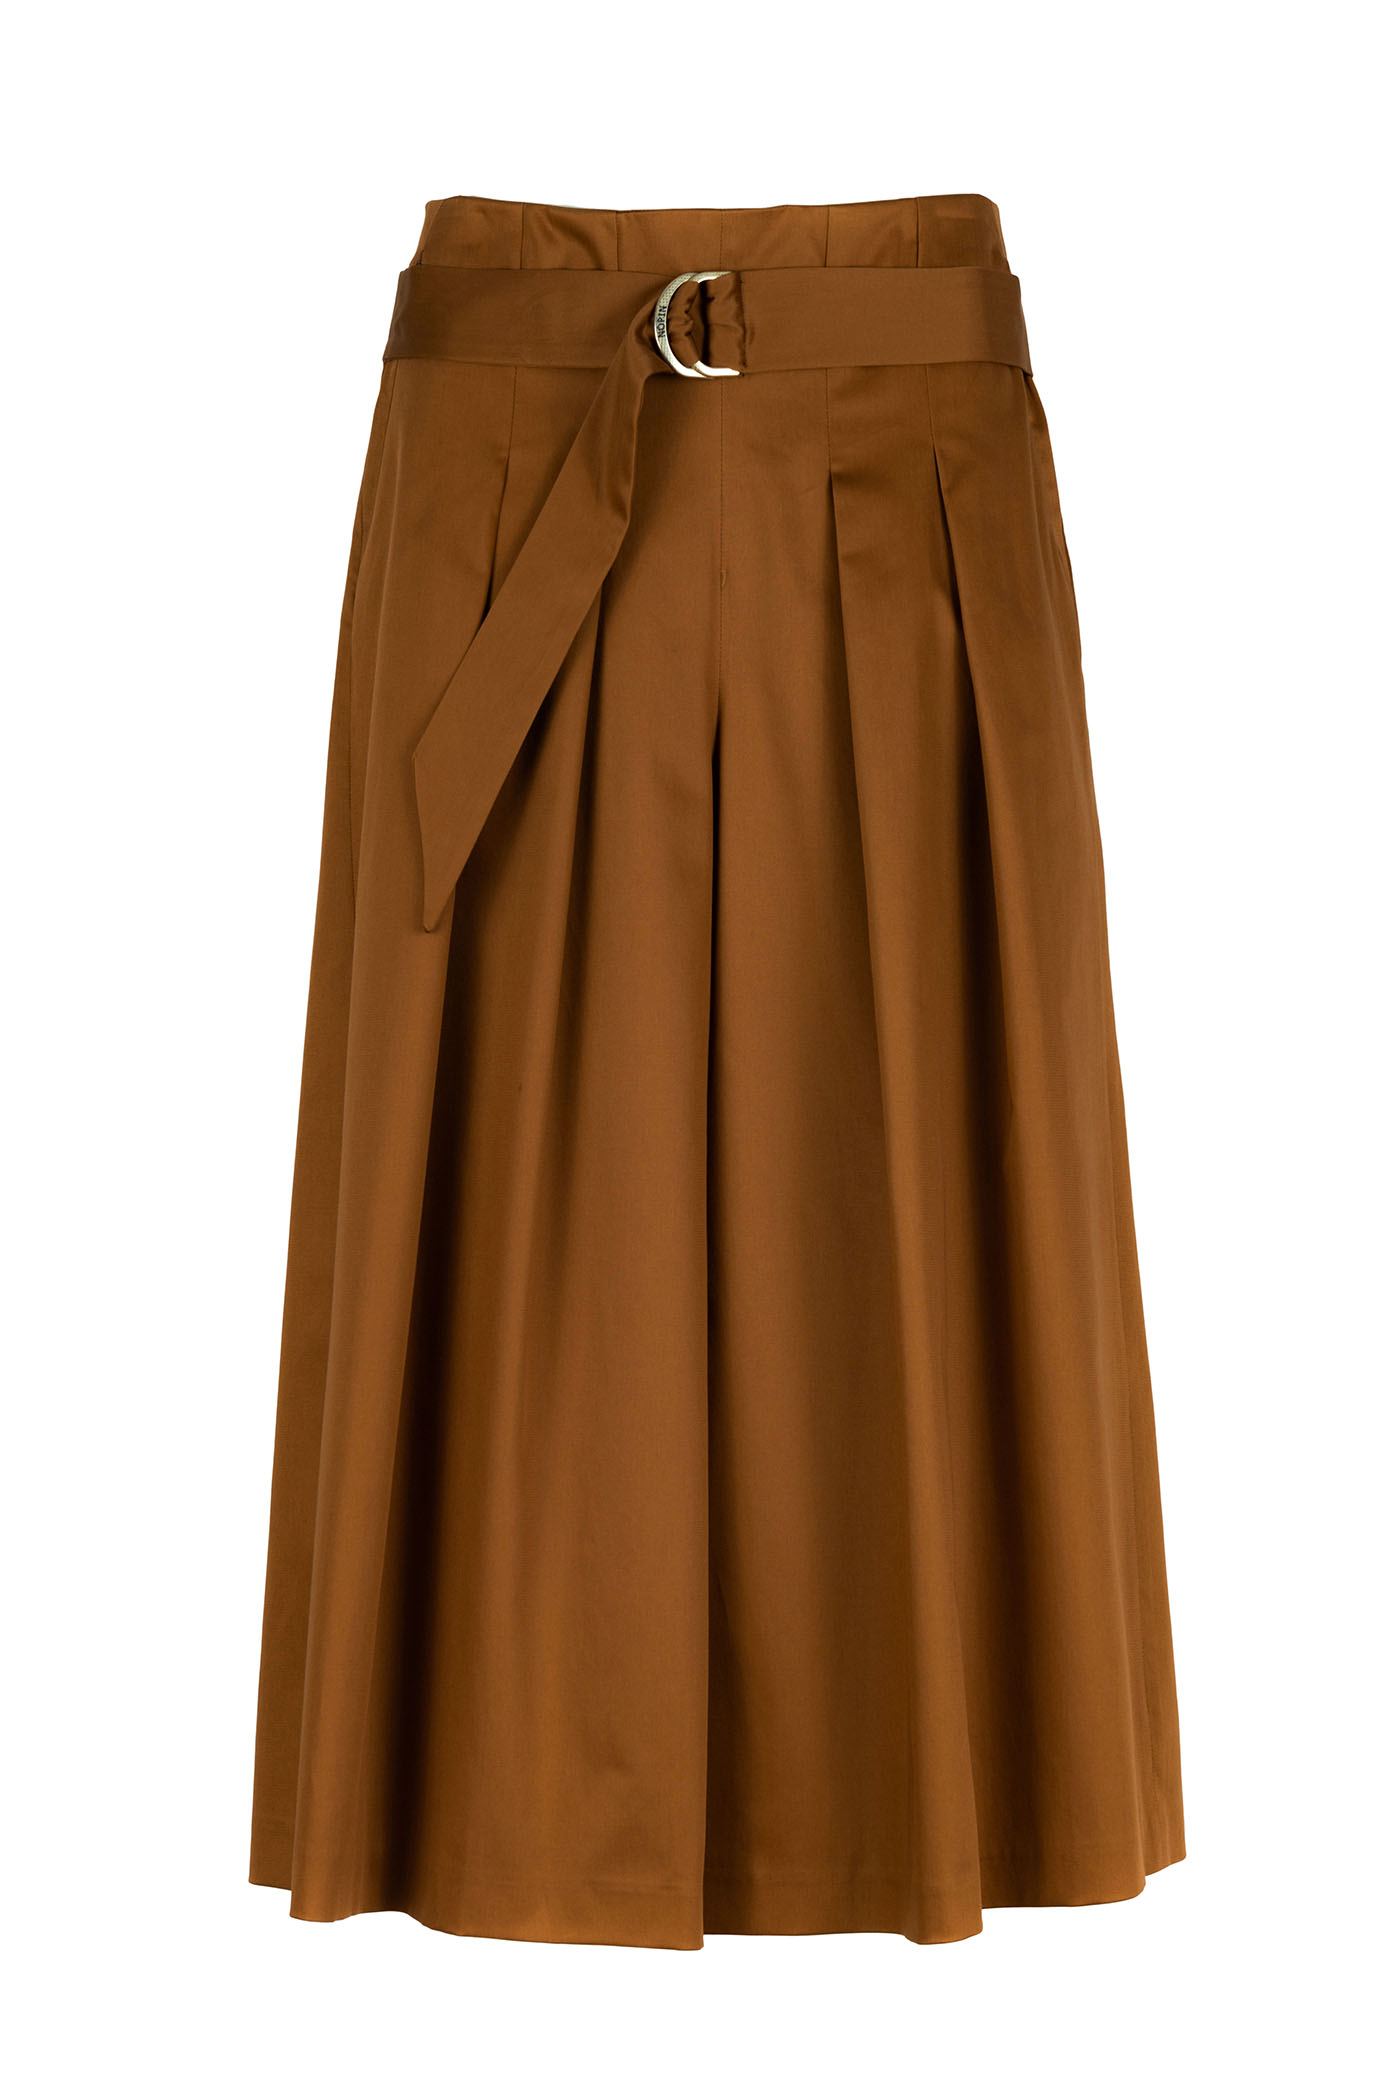 Caramel Skirt Nopin